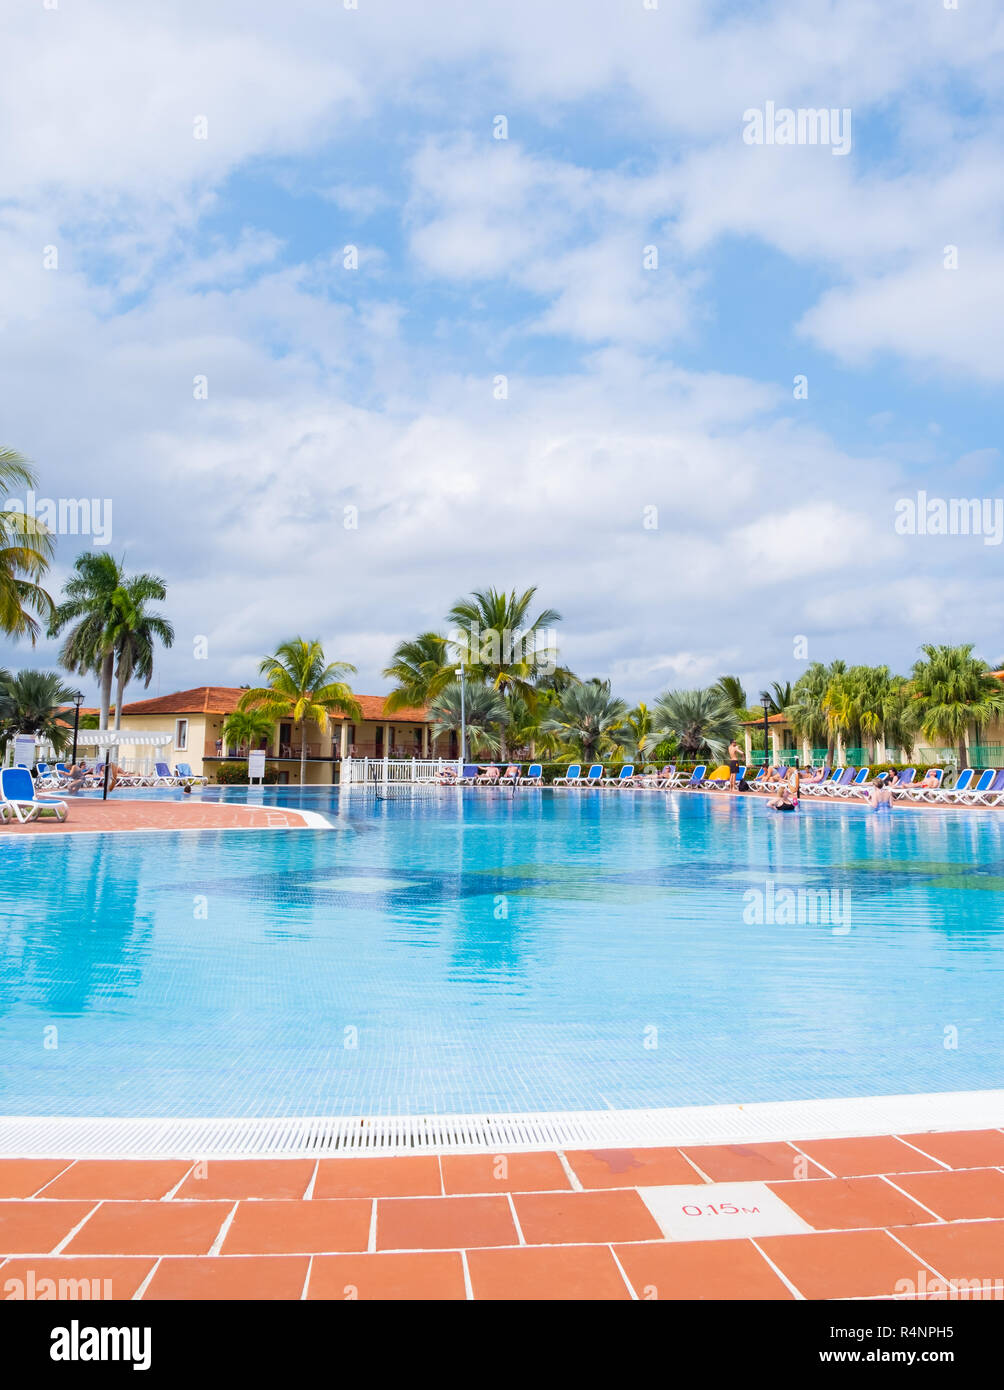 Bella piscina in un resort in Jibacoa Cuba in orientamento verticale. Foto Stock